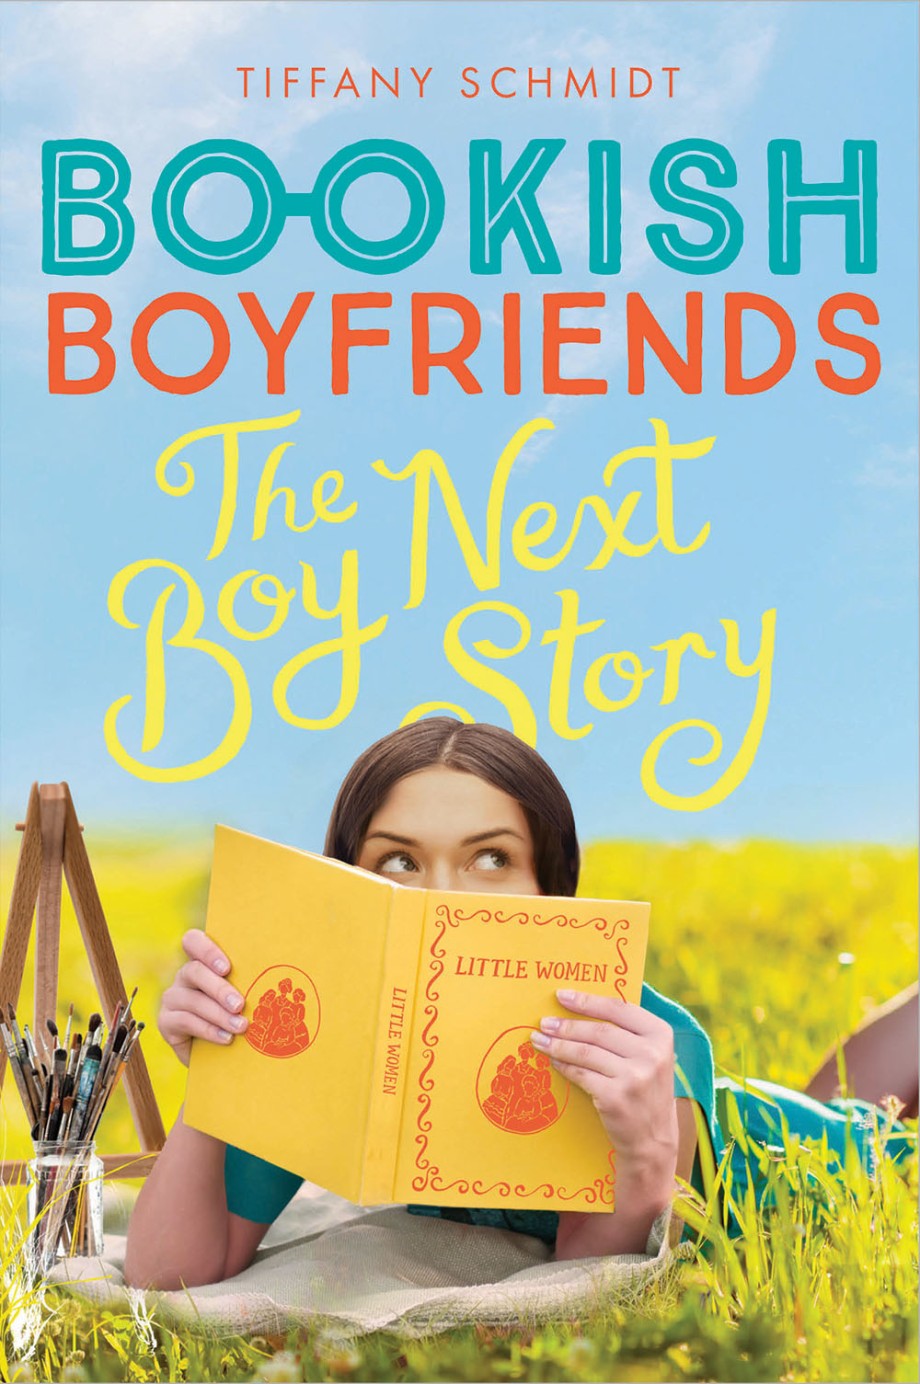 Boy Next Story A Bookish Boyfriends Novel